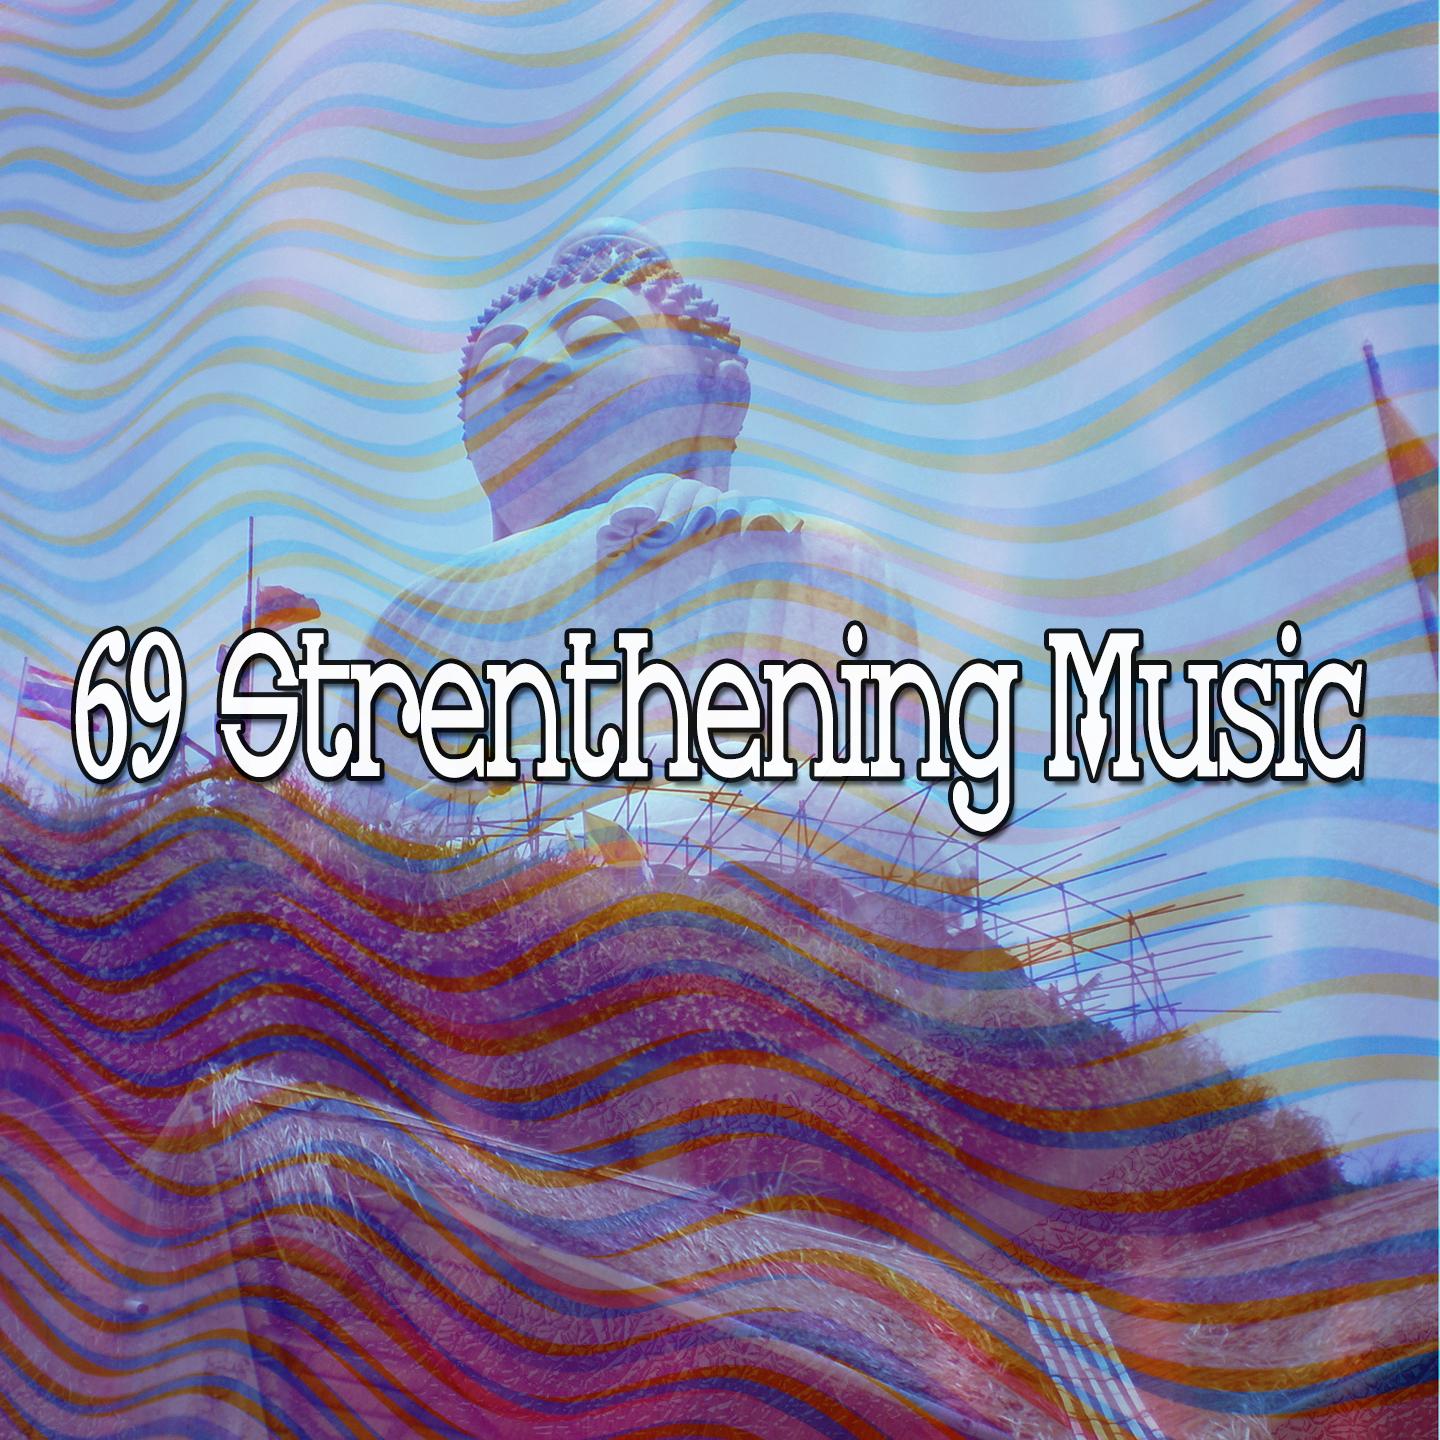 69 Strenthening Music